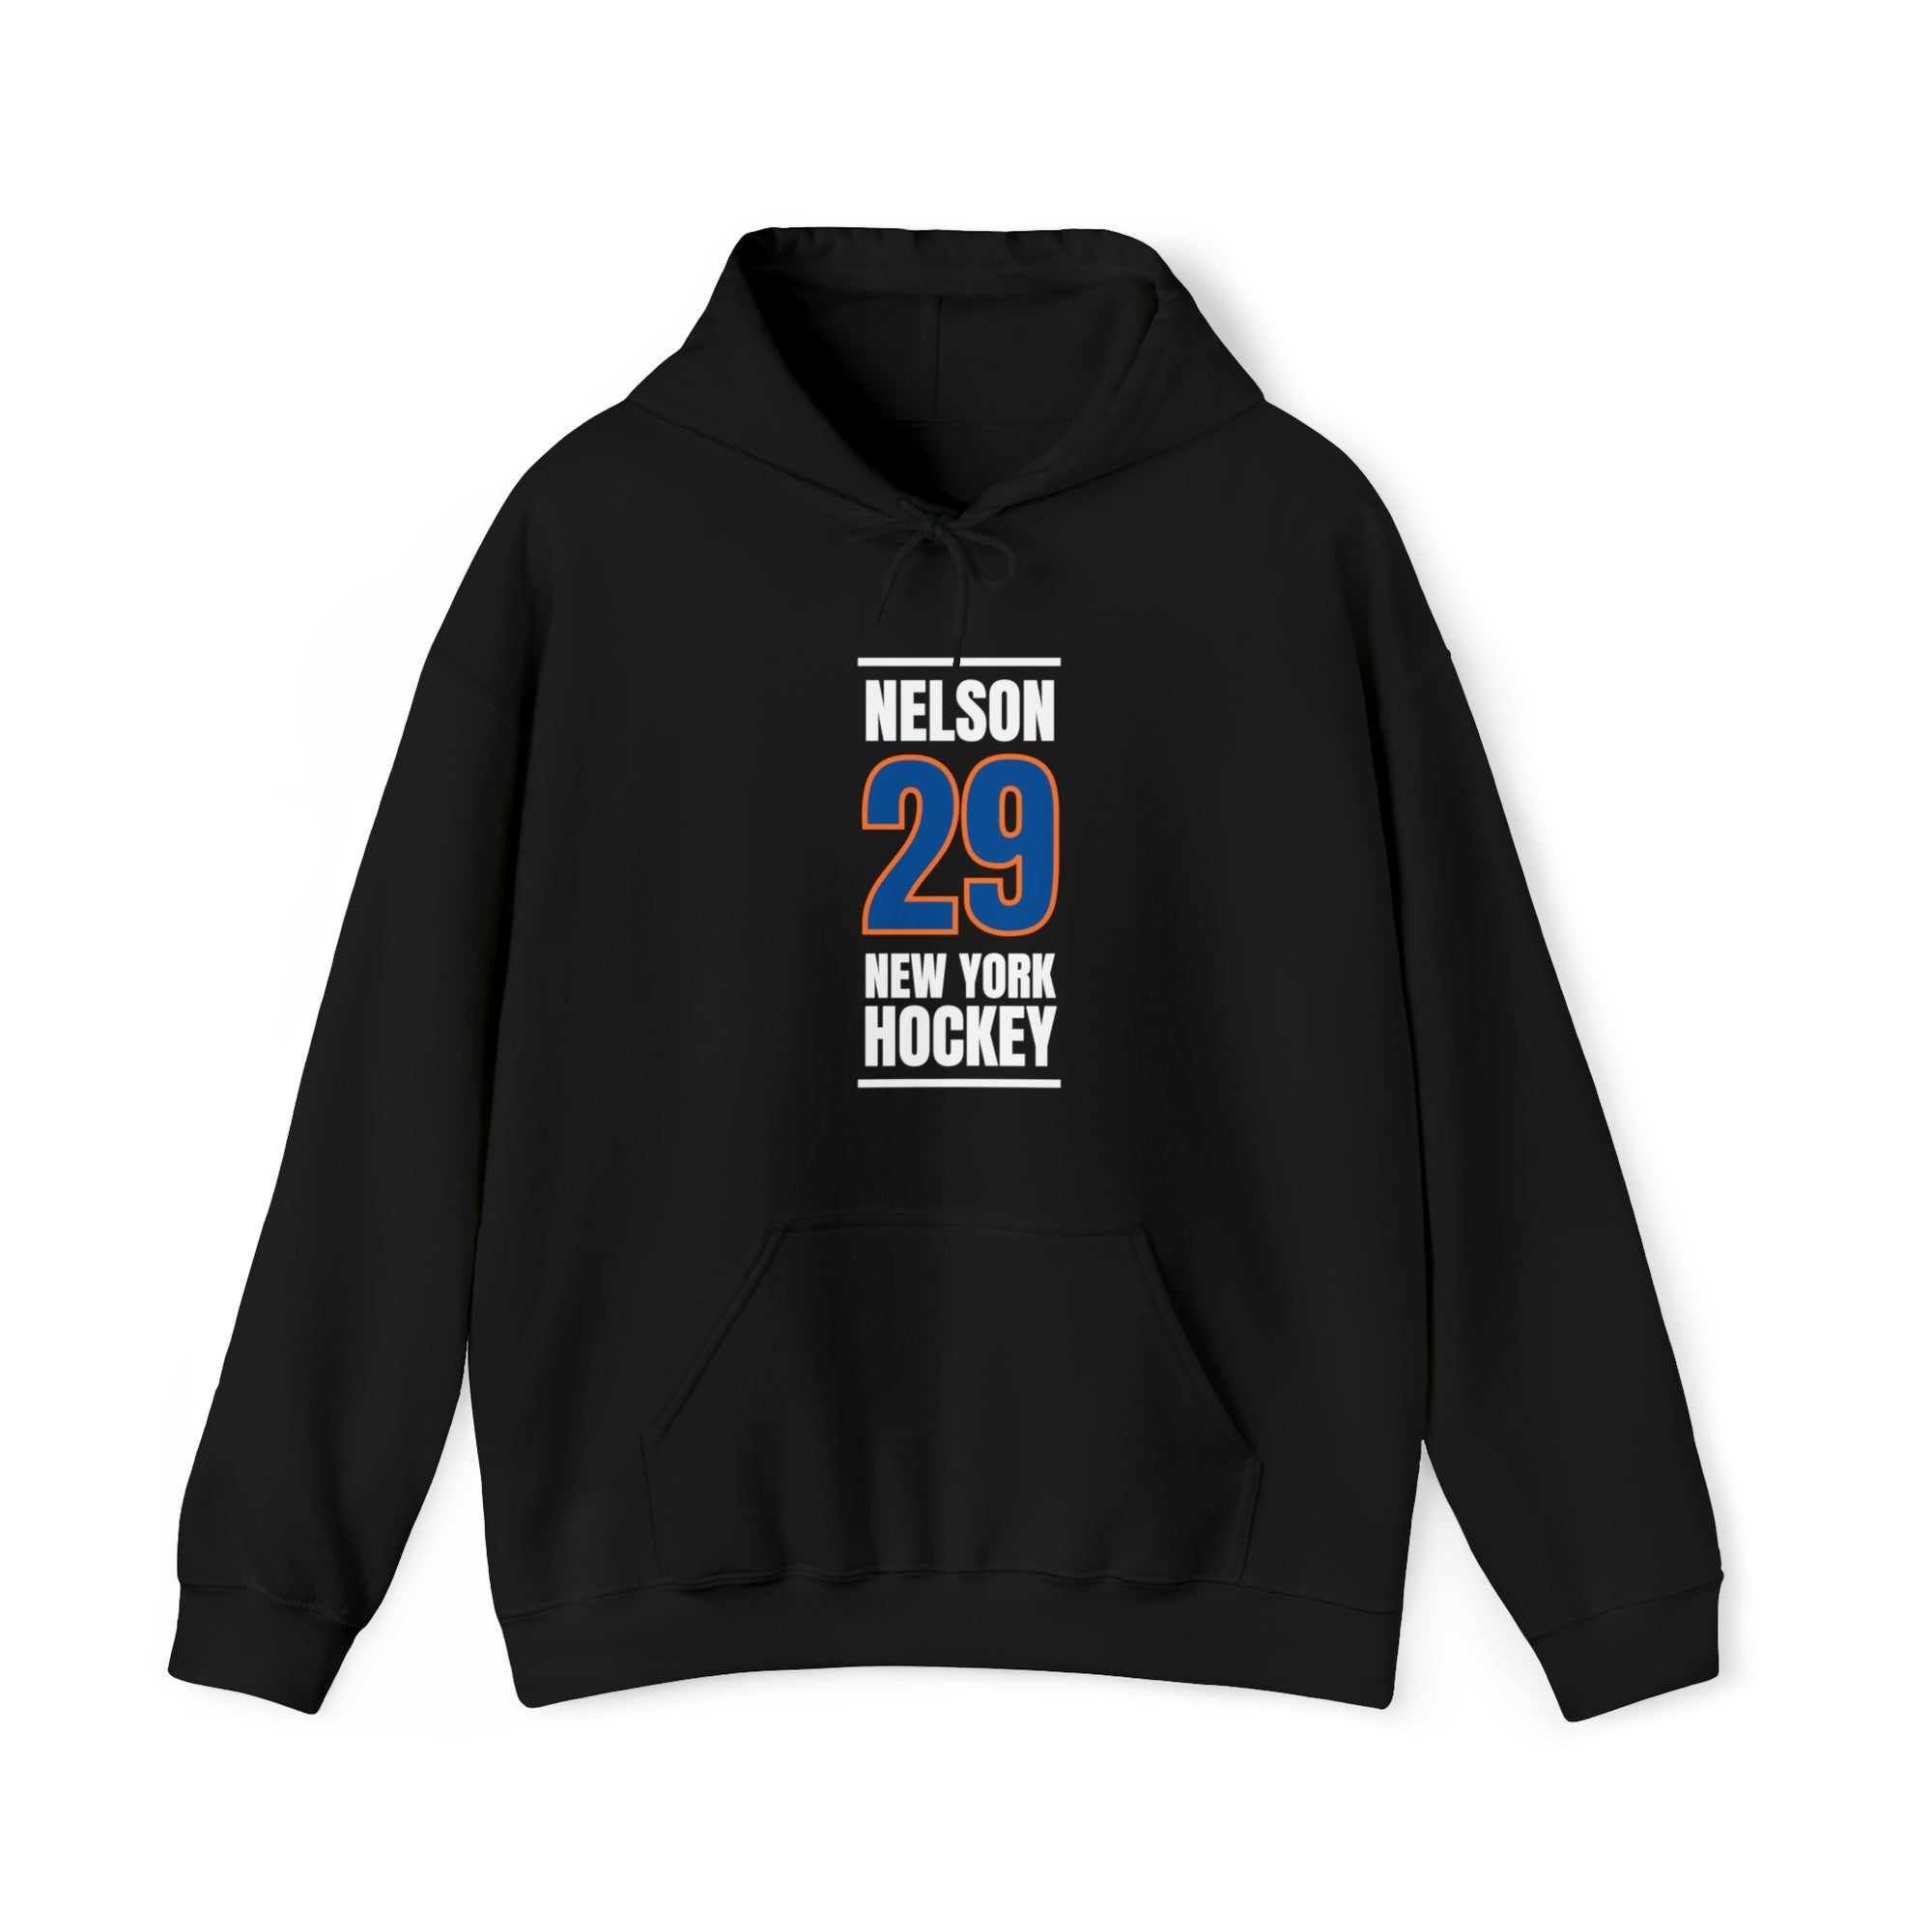 Nelson 29 New York Hockey Blue Vertical Design Unisex Hooded Sweatshirt